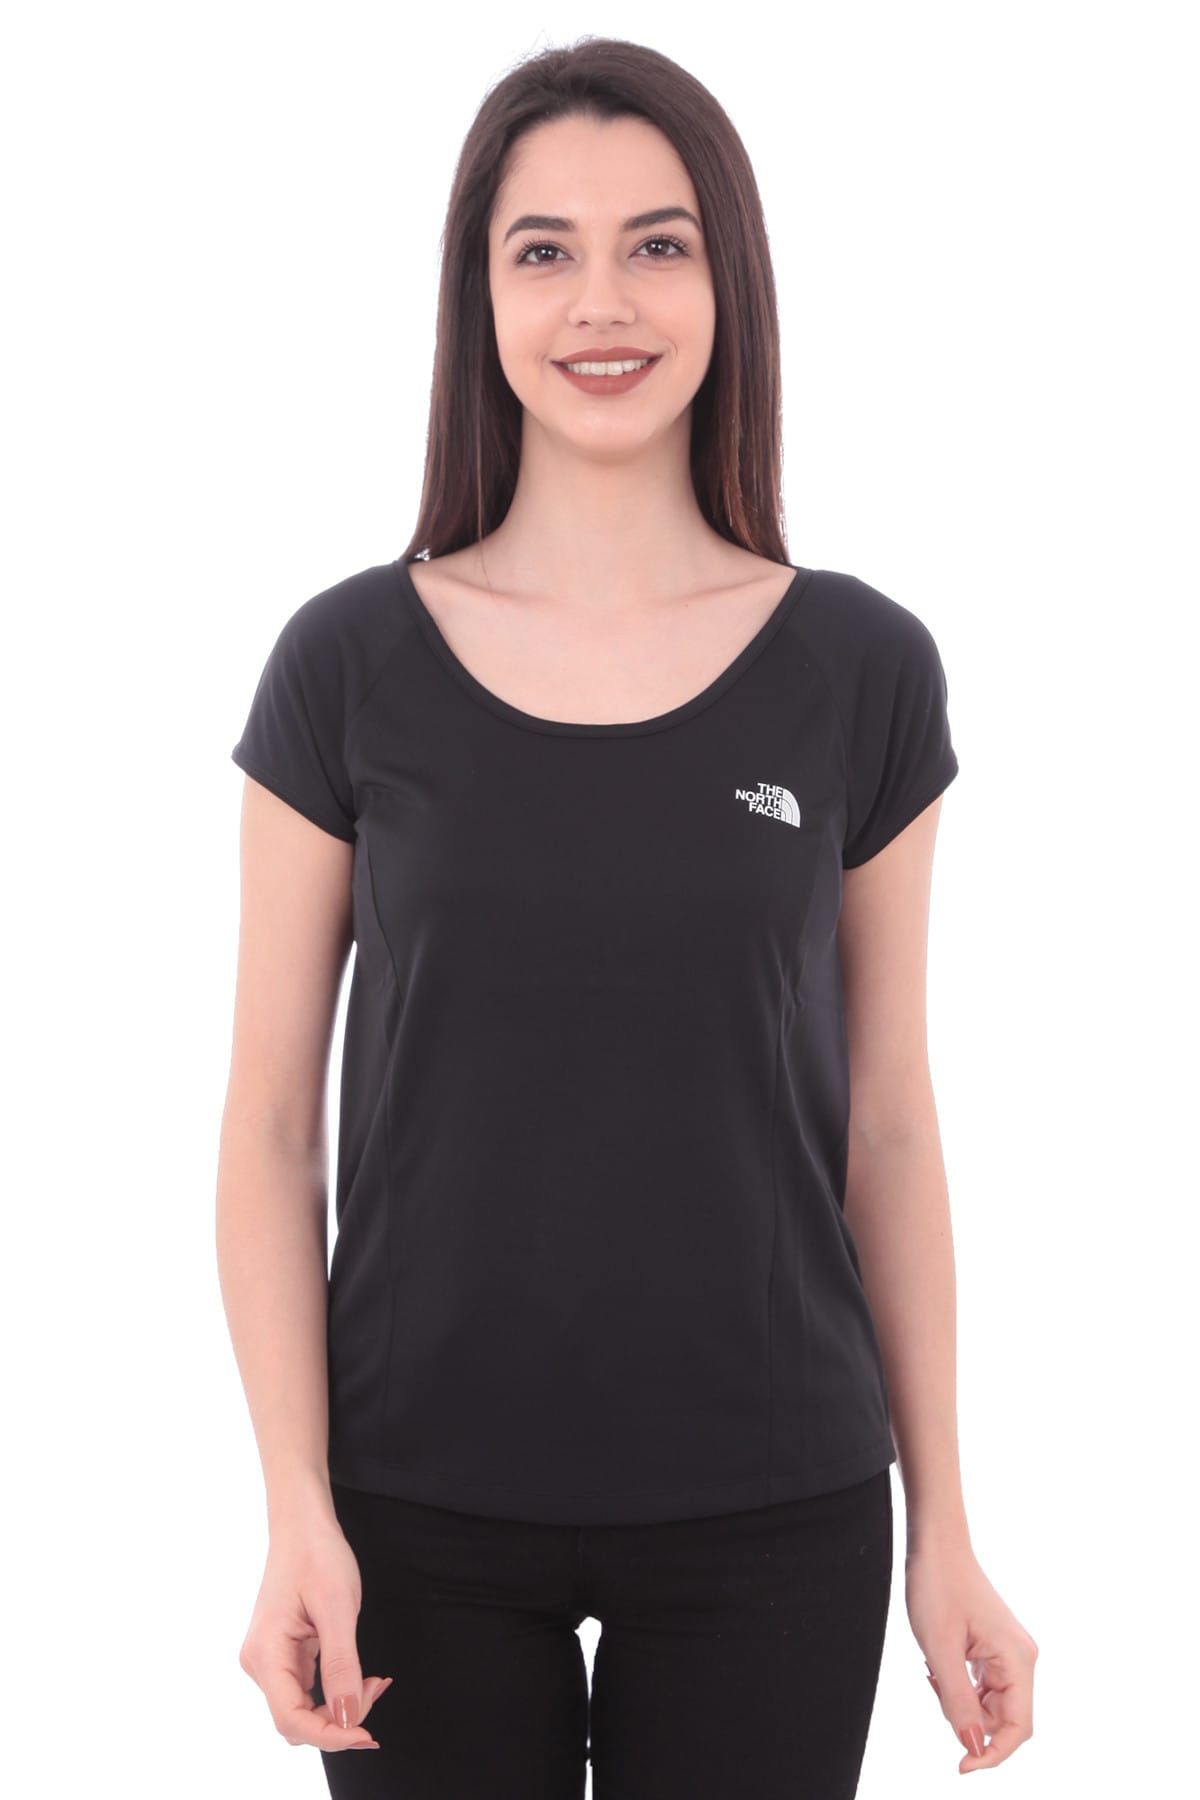 The North Face Kadın T-Shirt Siyah - W Hıkesteller S-S Top  - T93RZGJK3